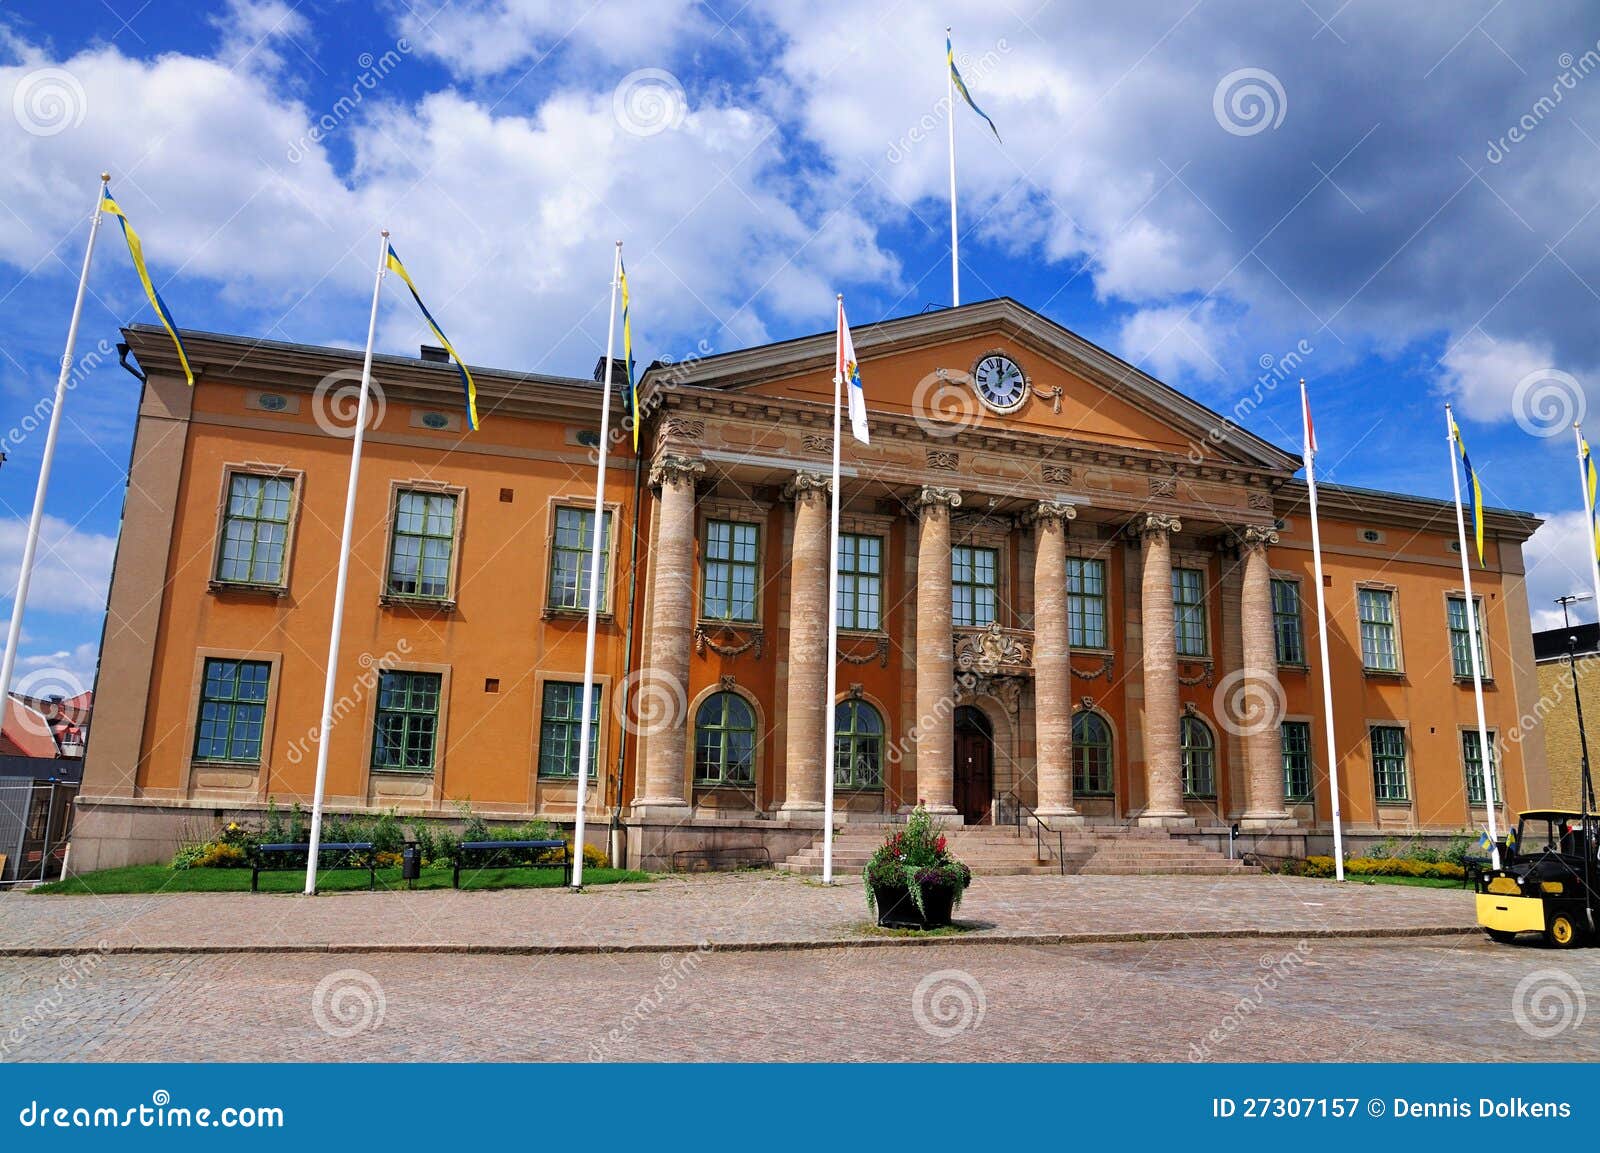 courthouse of karlskrona, sweden